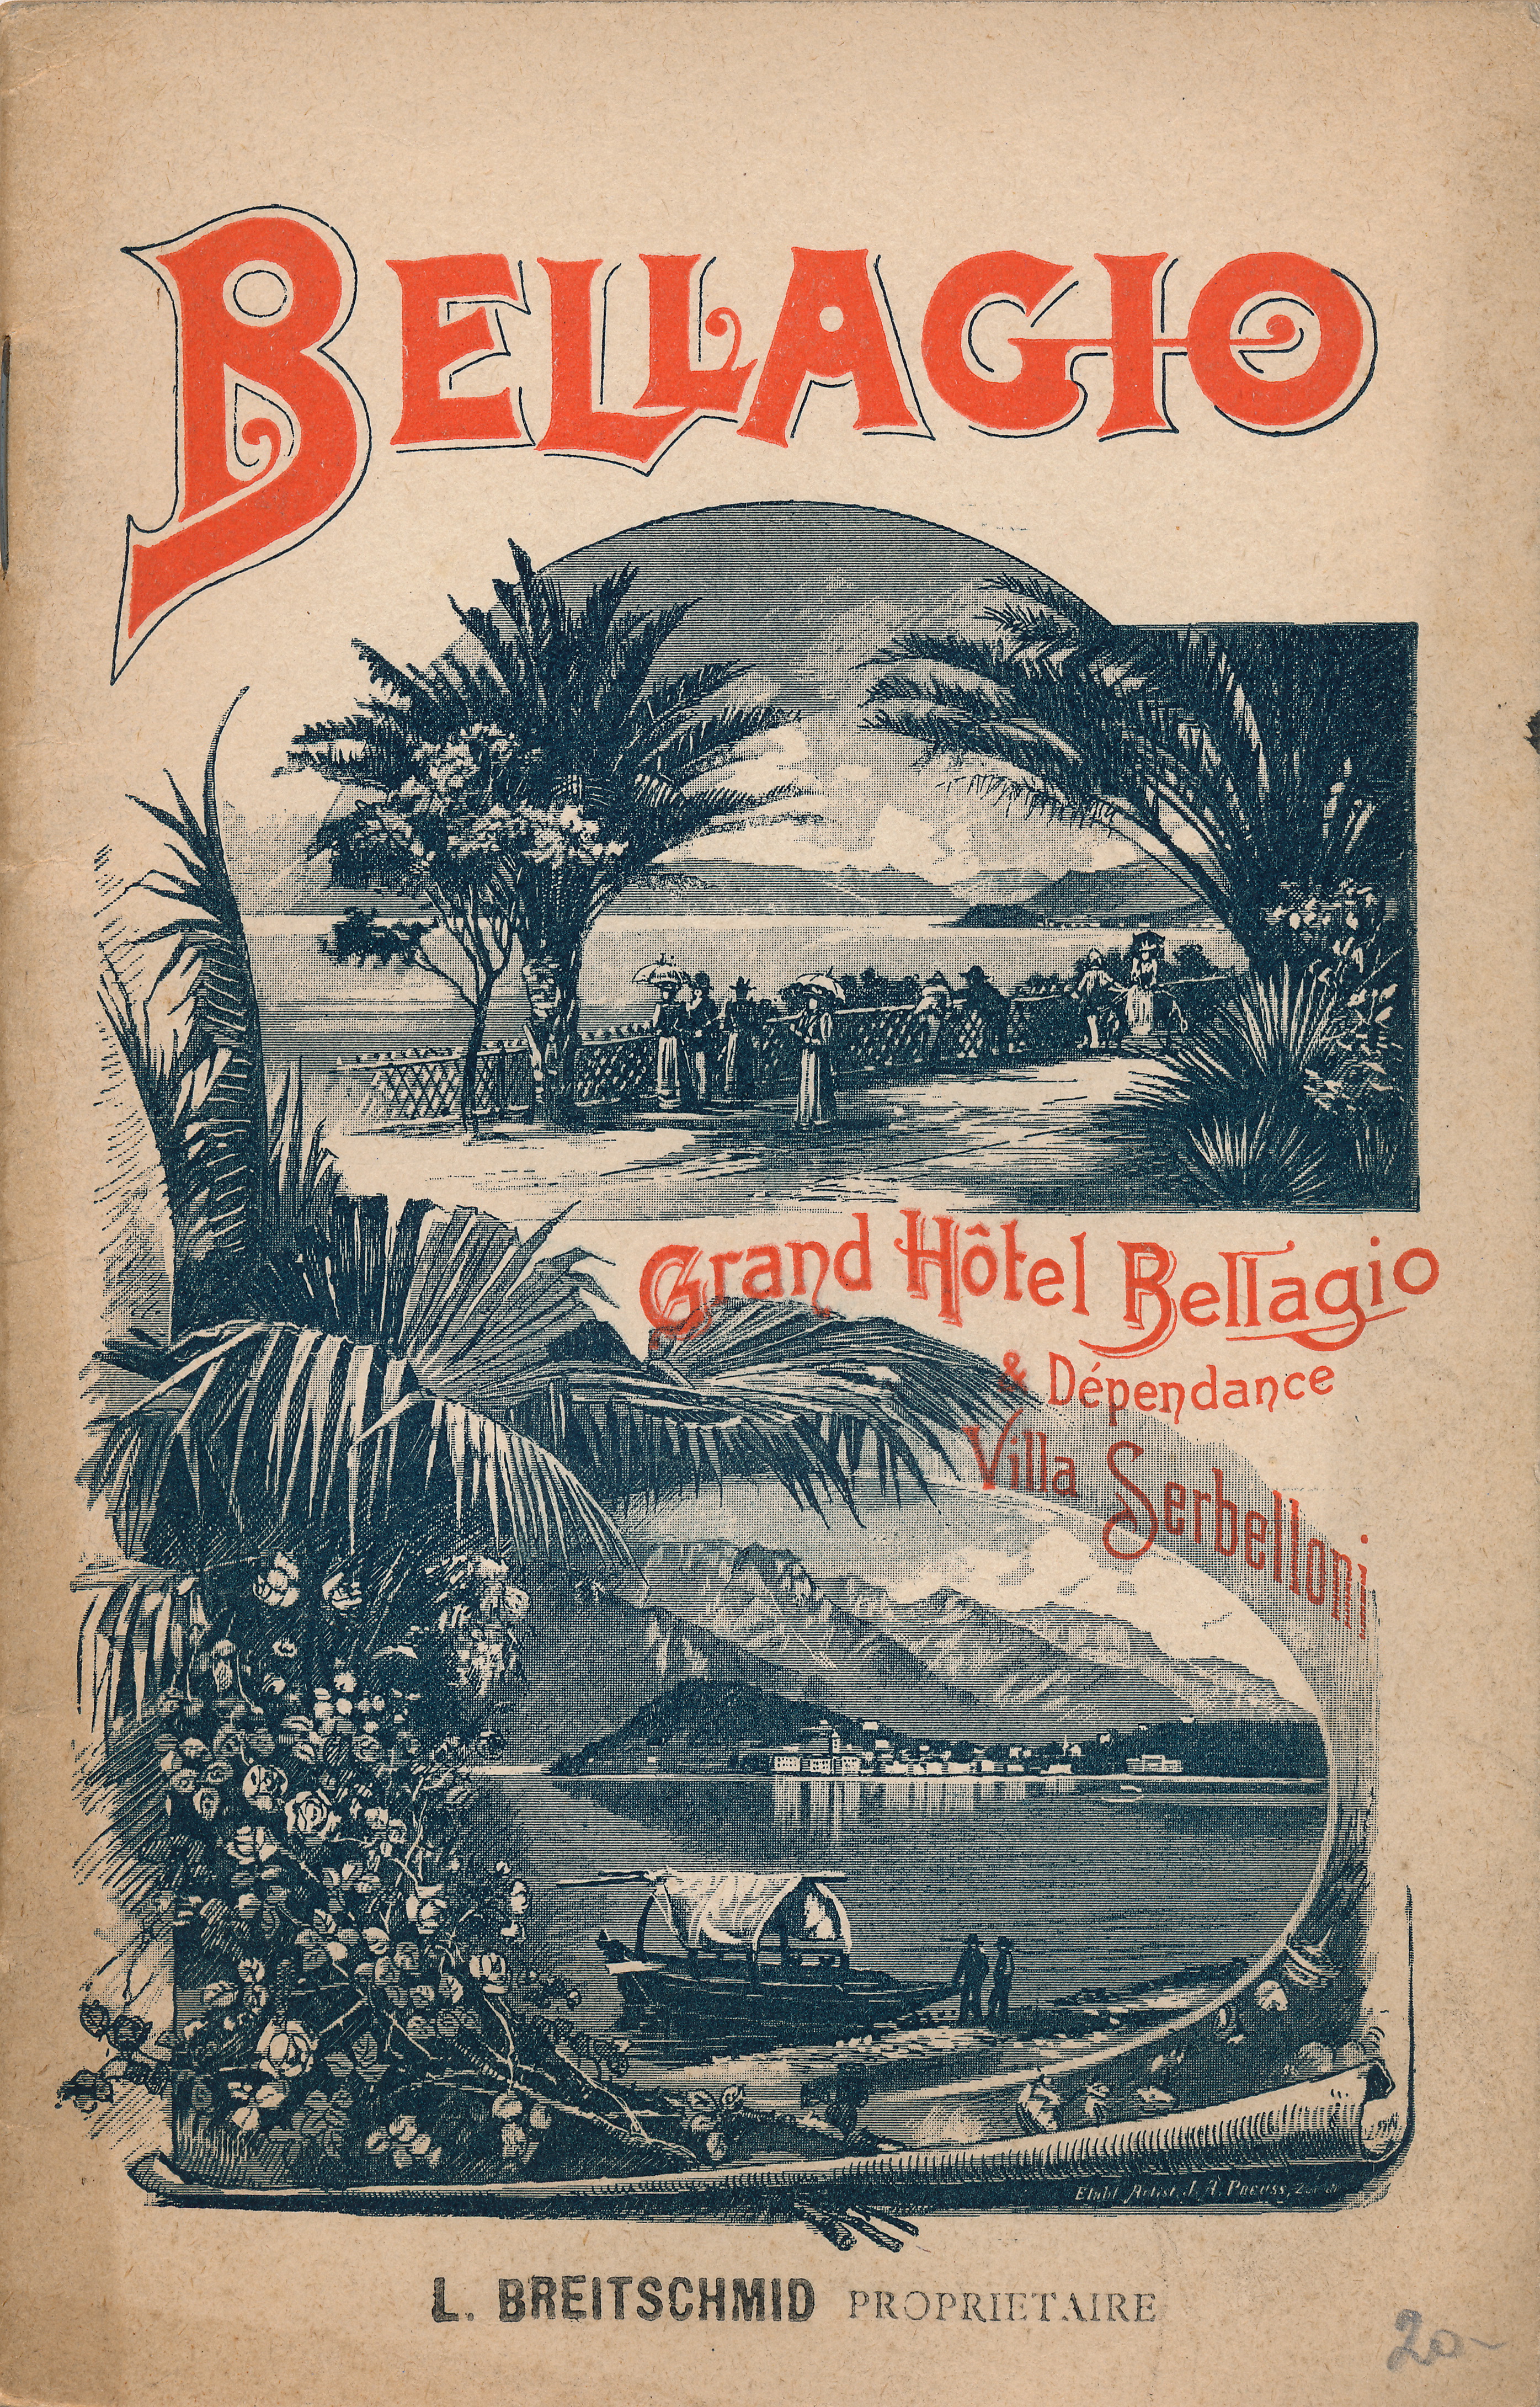 Old Brochure of Grand Hôtel Bellagio. Collection The Traveling Gentleman @travelinggentleman